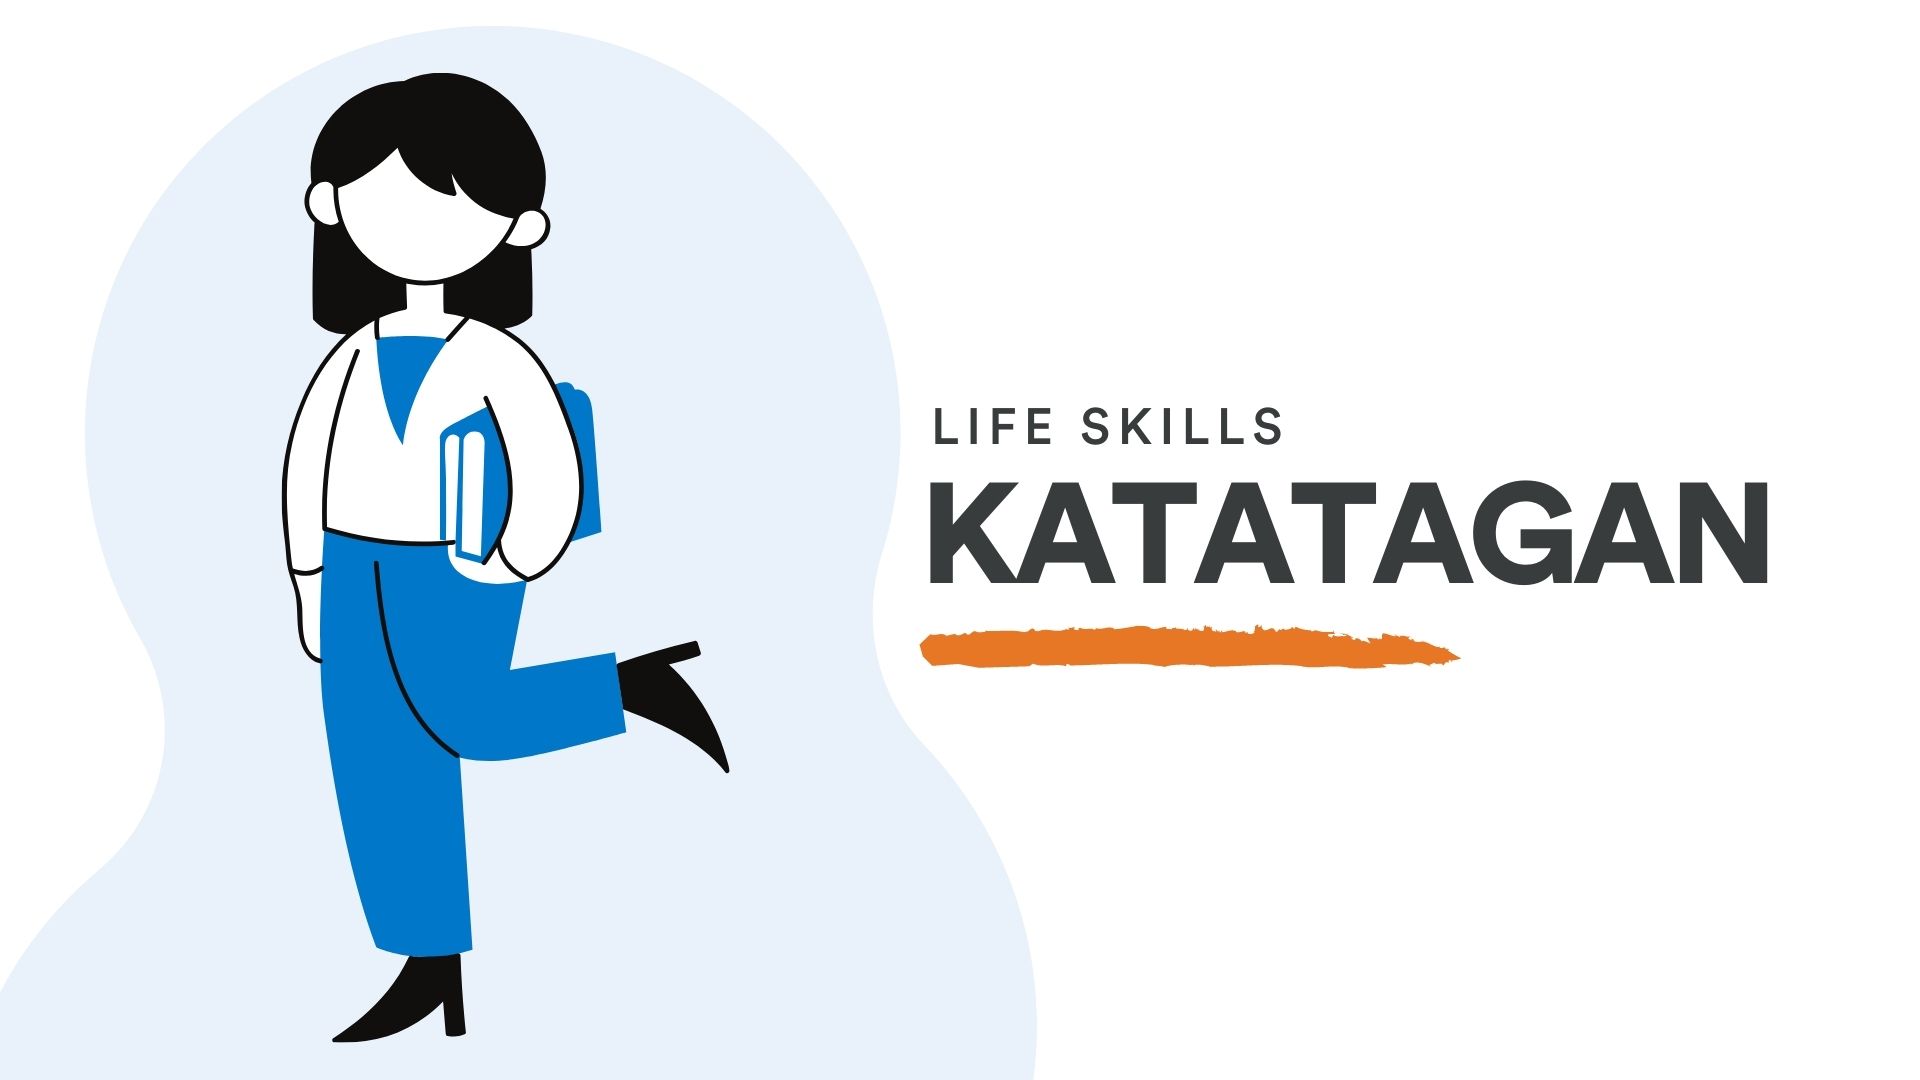 Katatagan: Life Skills